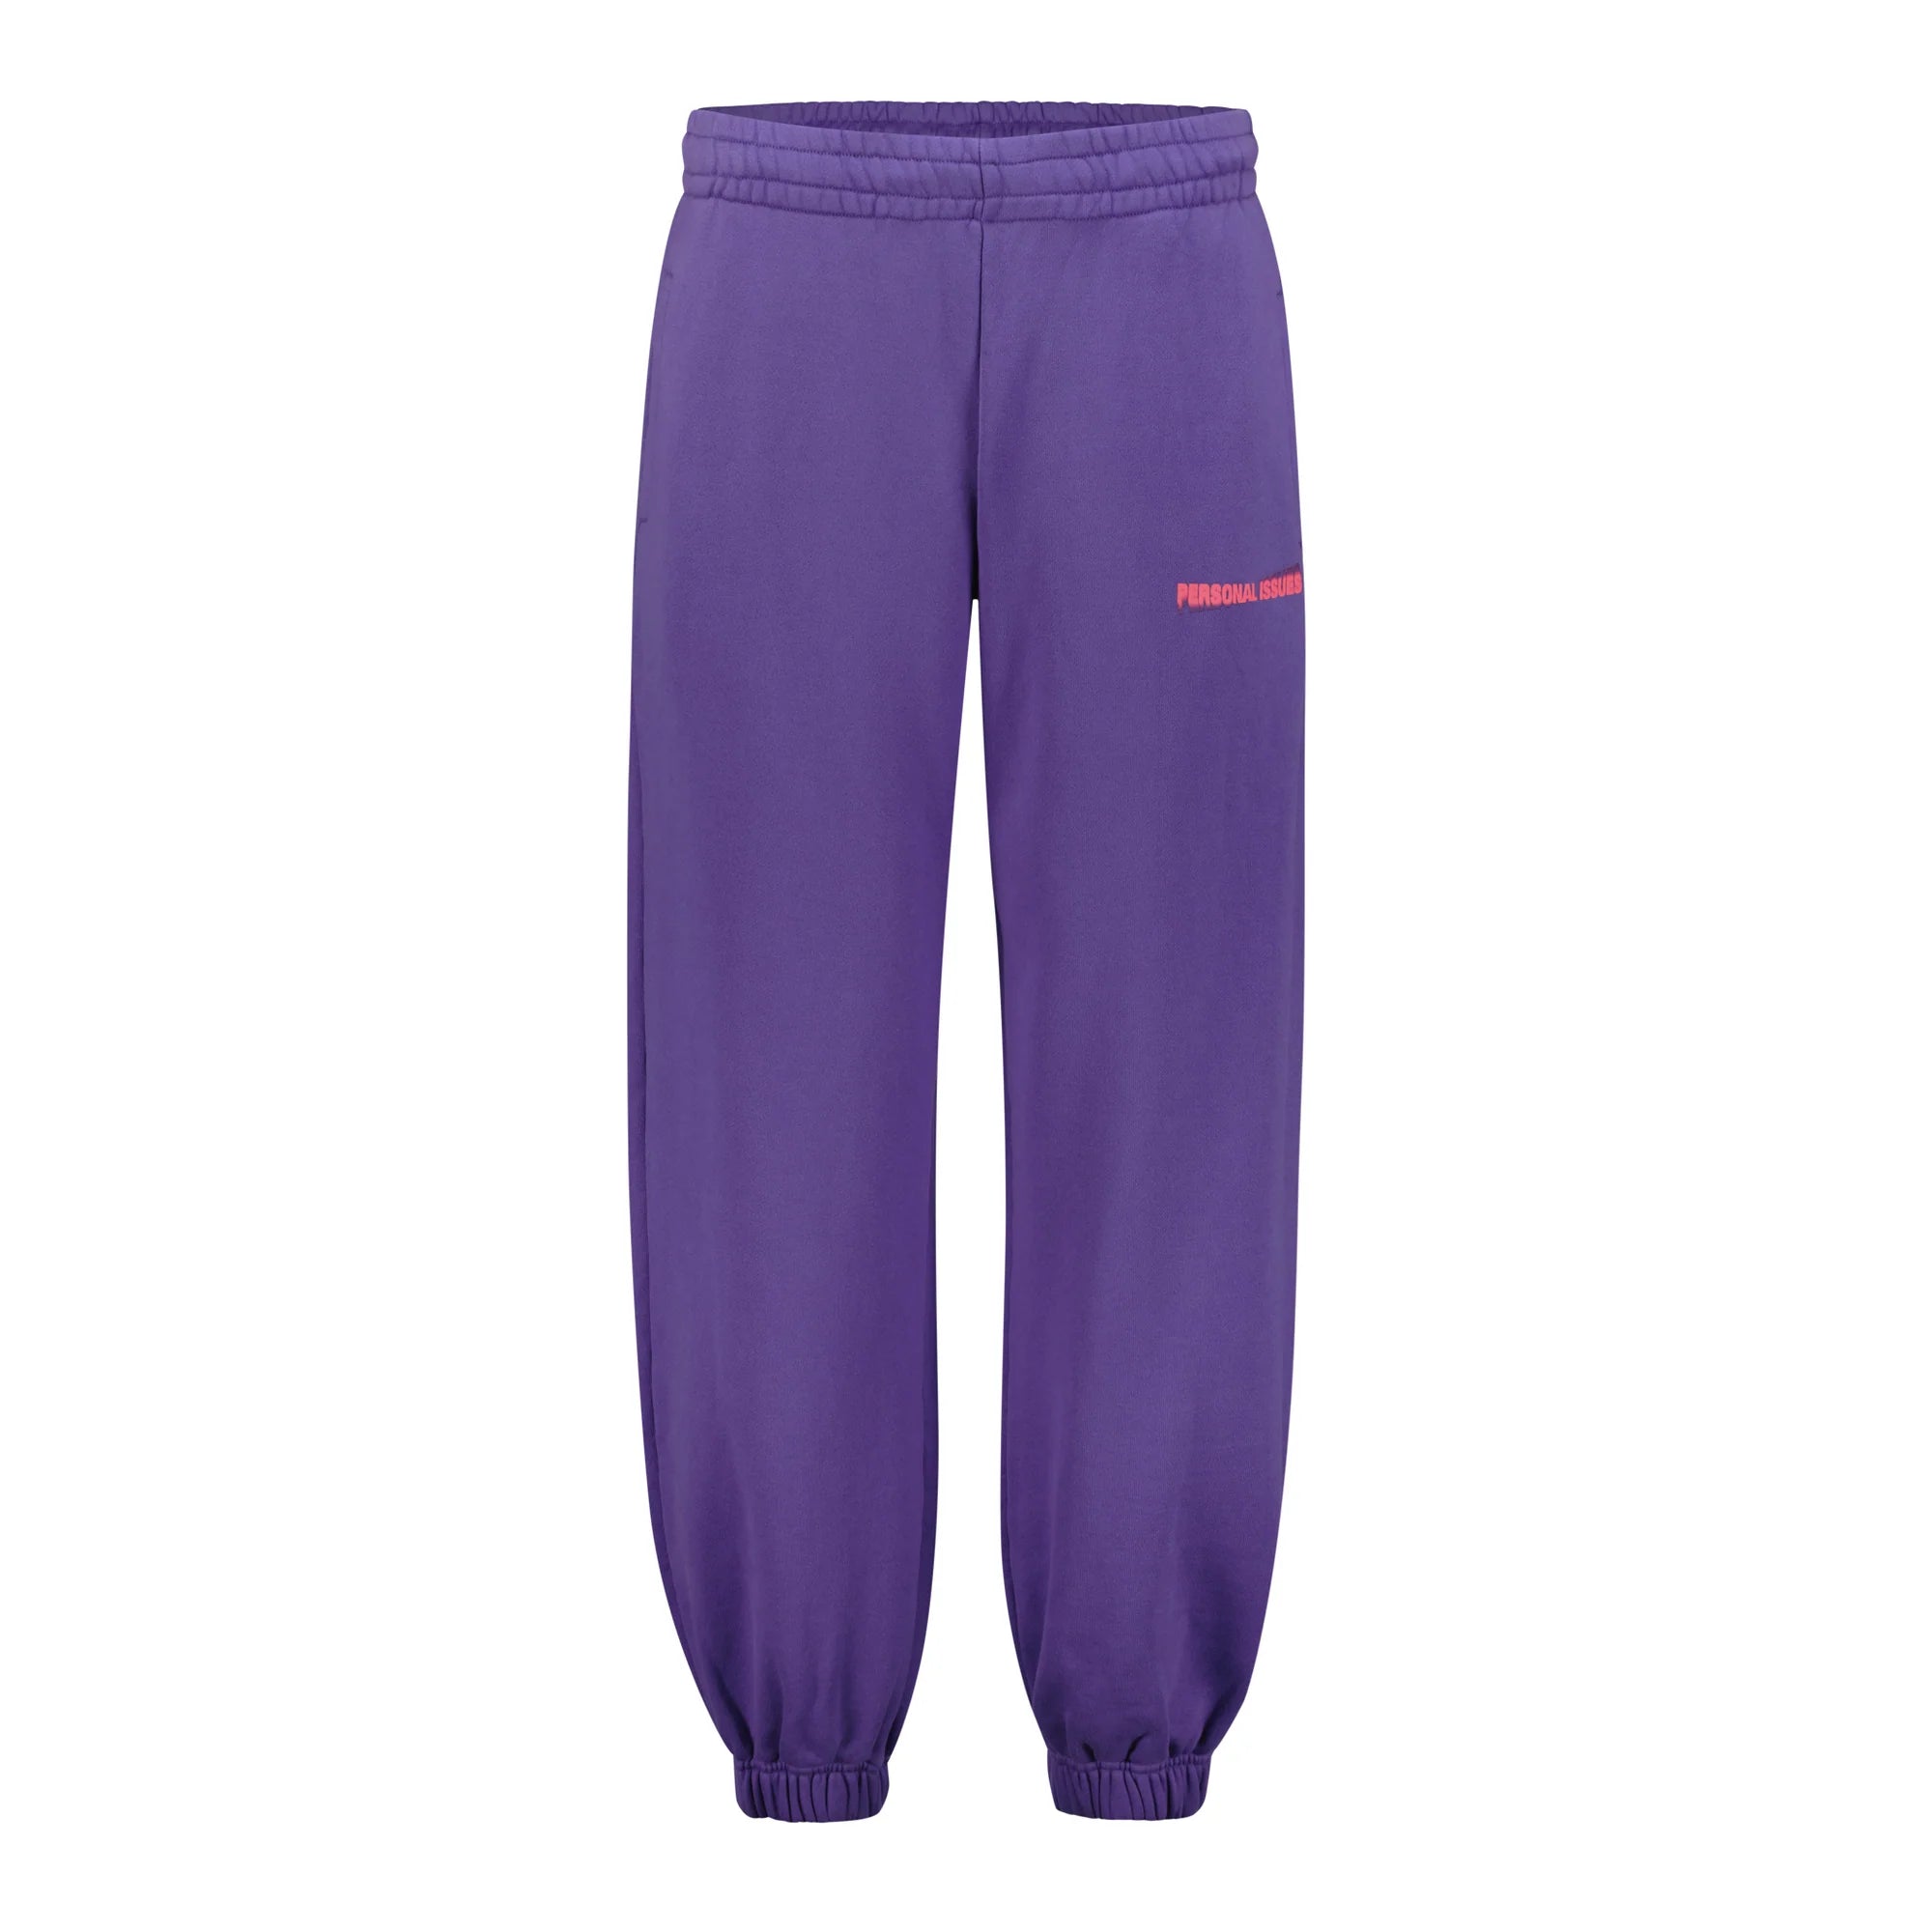 Personal Issues Sweatpants - Purple